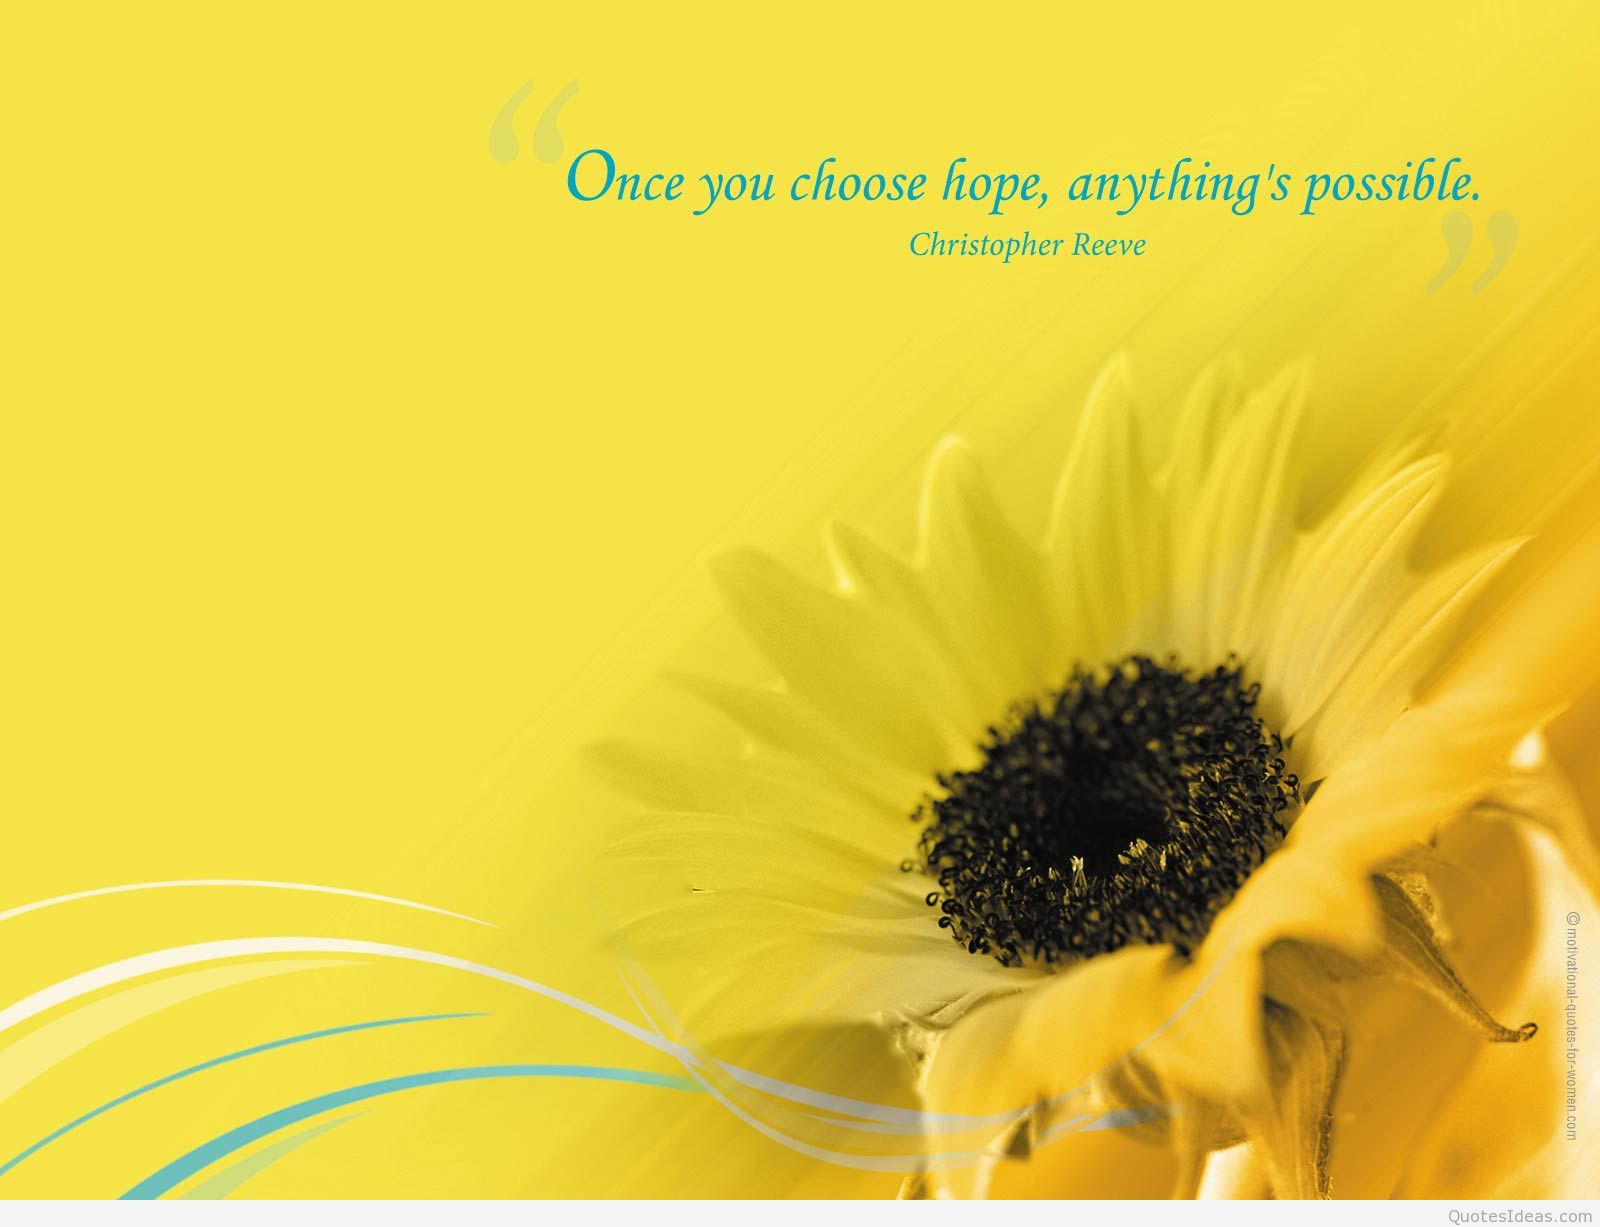 inspirational quotes wallpaper hd free download,sunflower,yellow,flower,sunflower,text